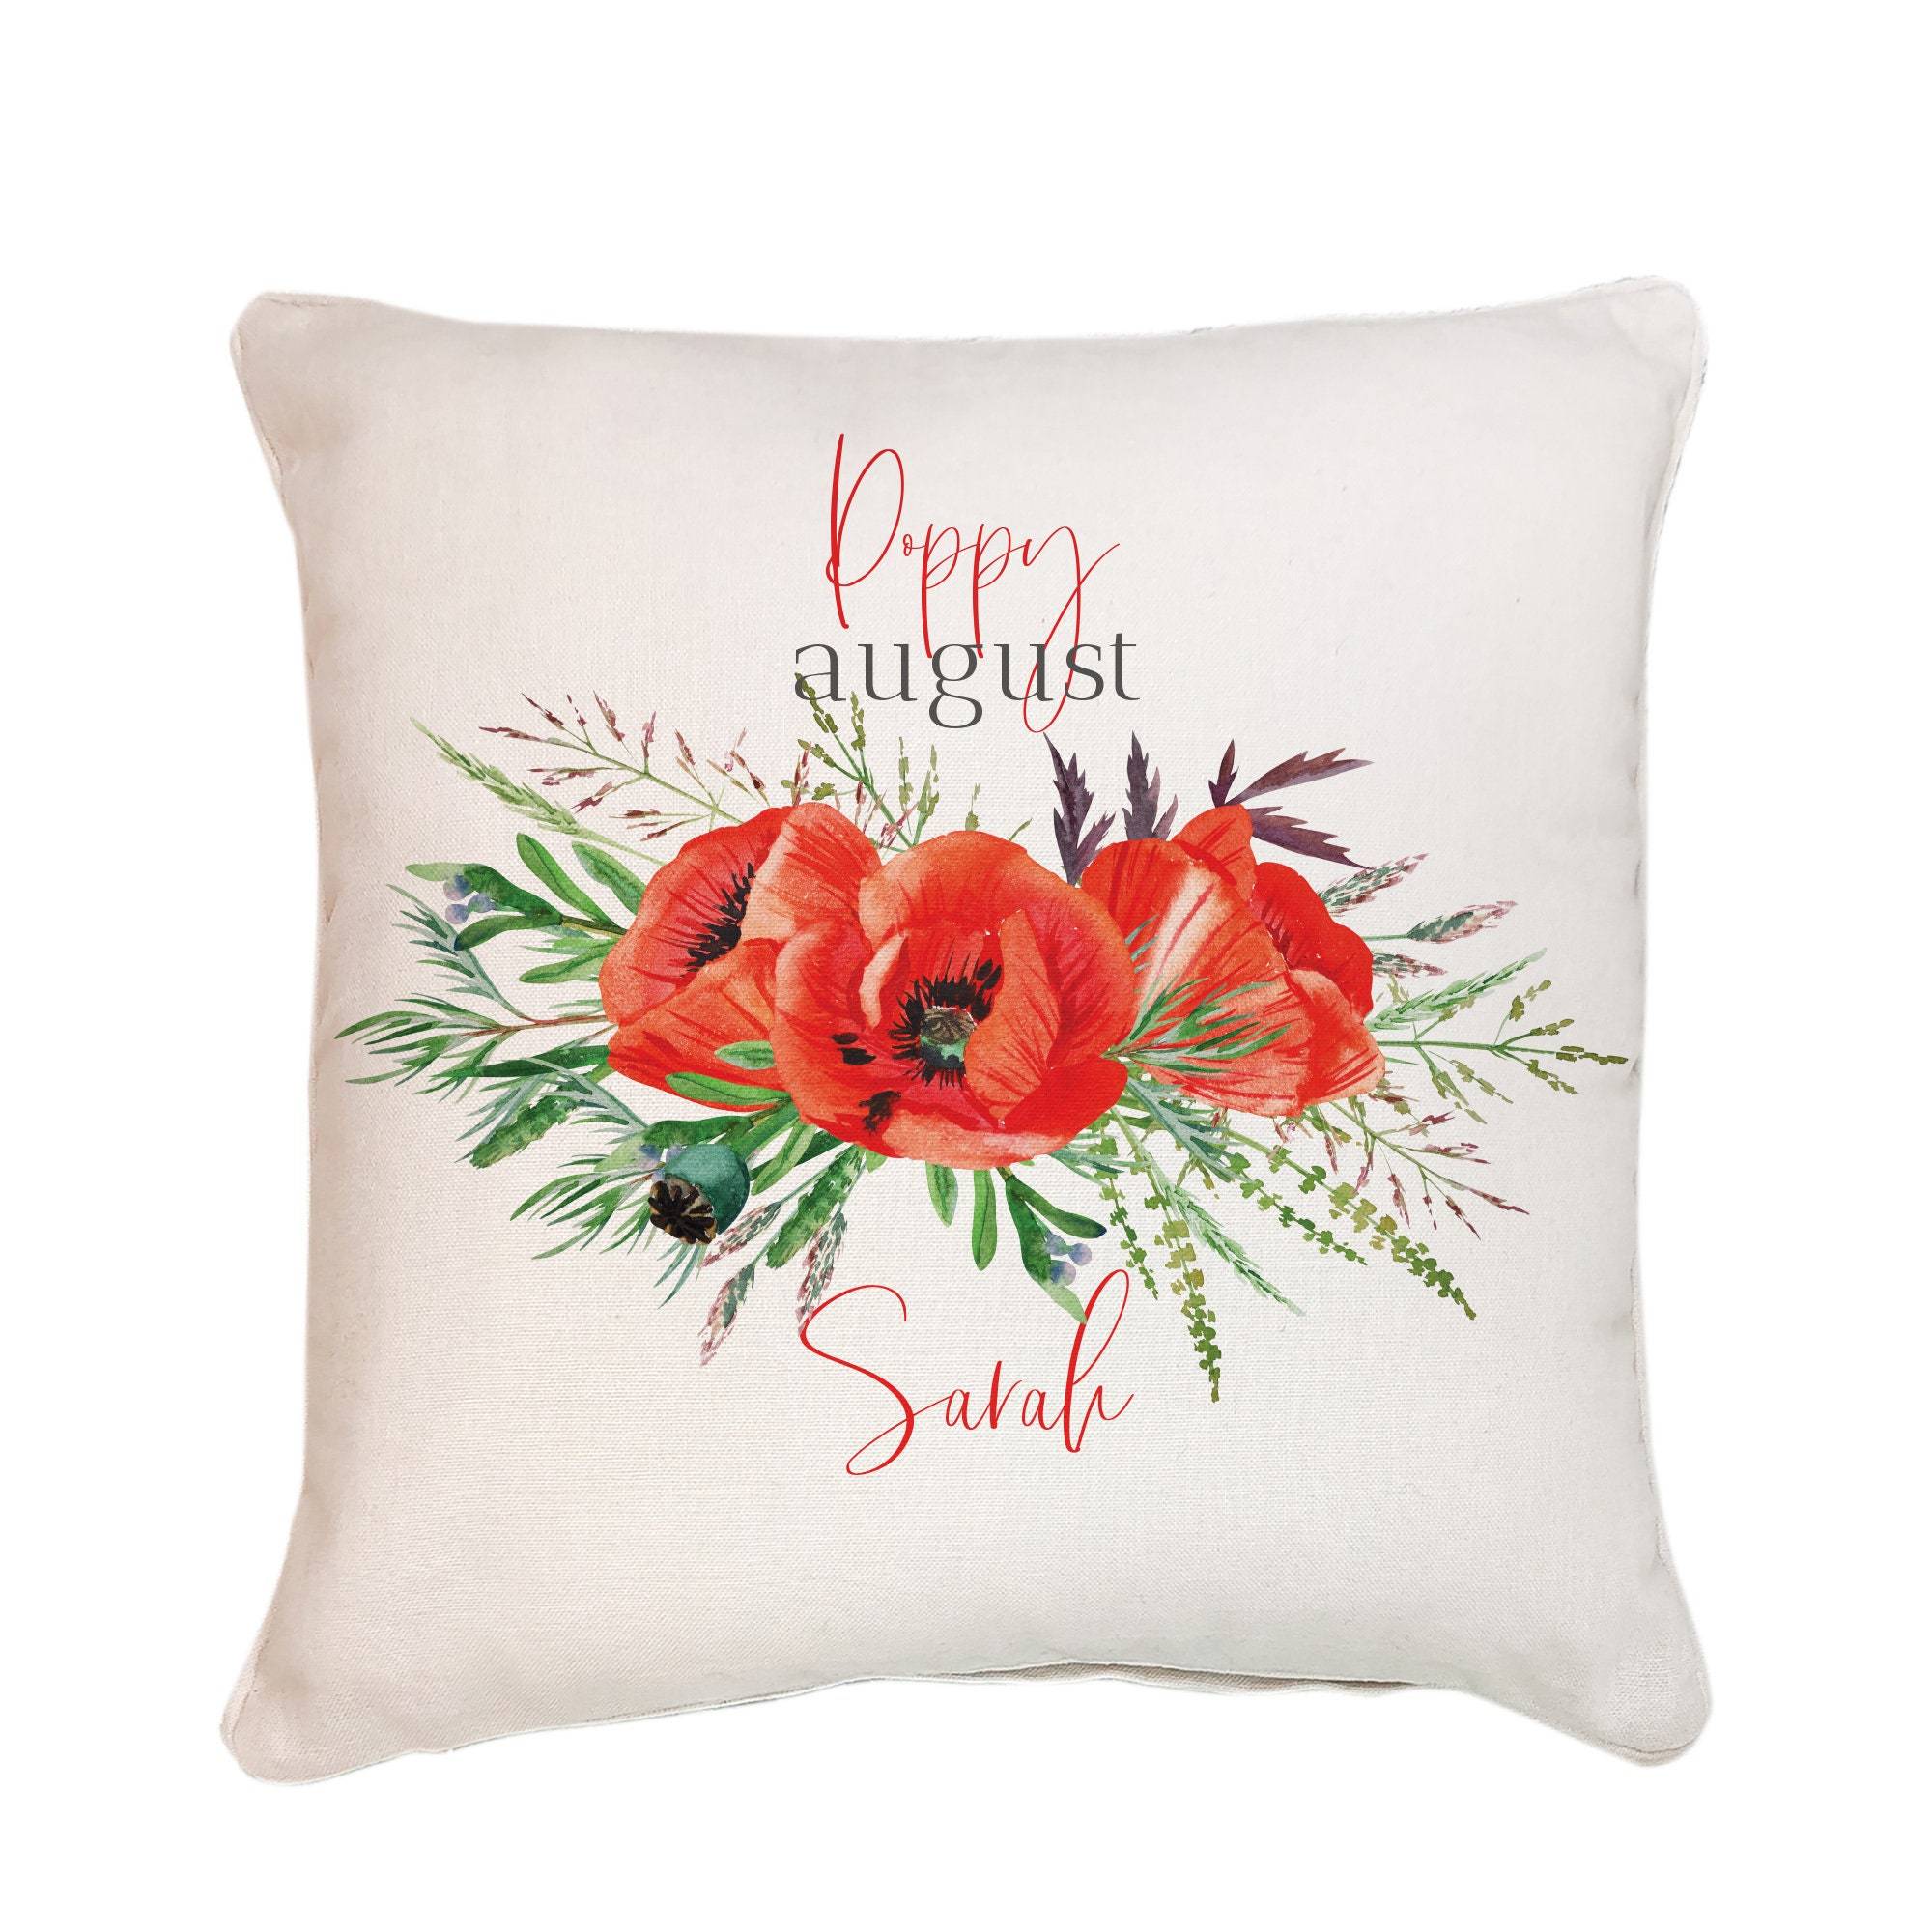 Personalised birth flower cushion, August birth flower poppy, Floral design birthday gift